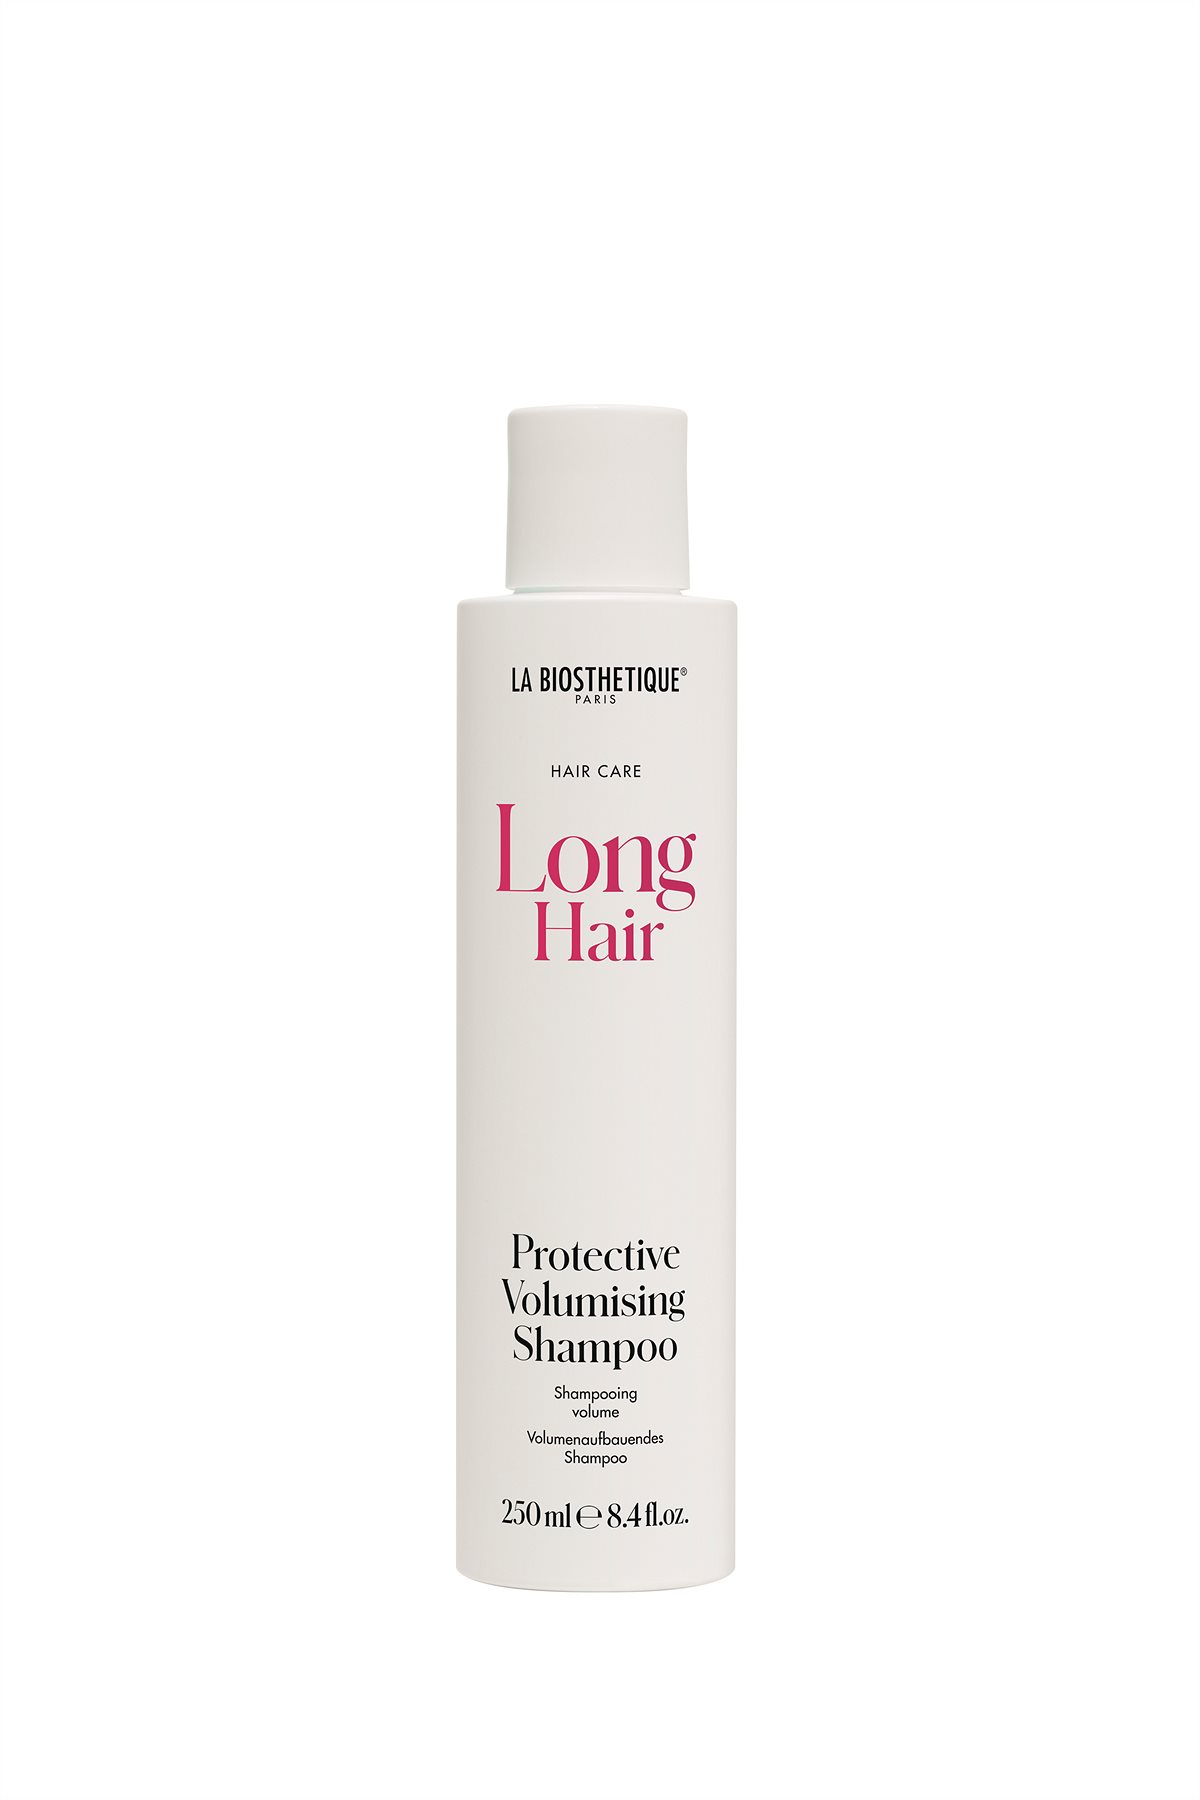 La Biosthétique Long Hair_Protective Volumising Shampoo_250ml_EUR 25,50